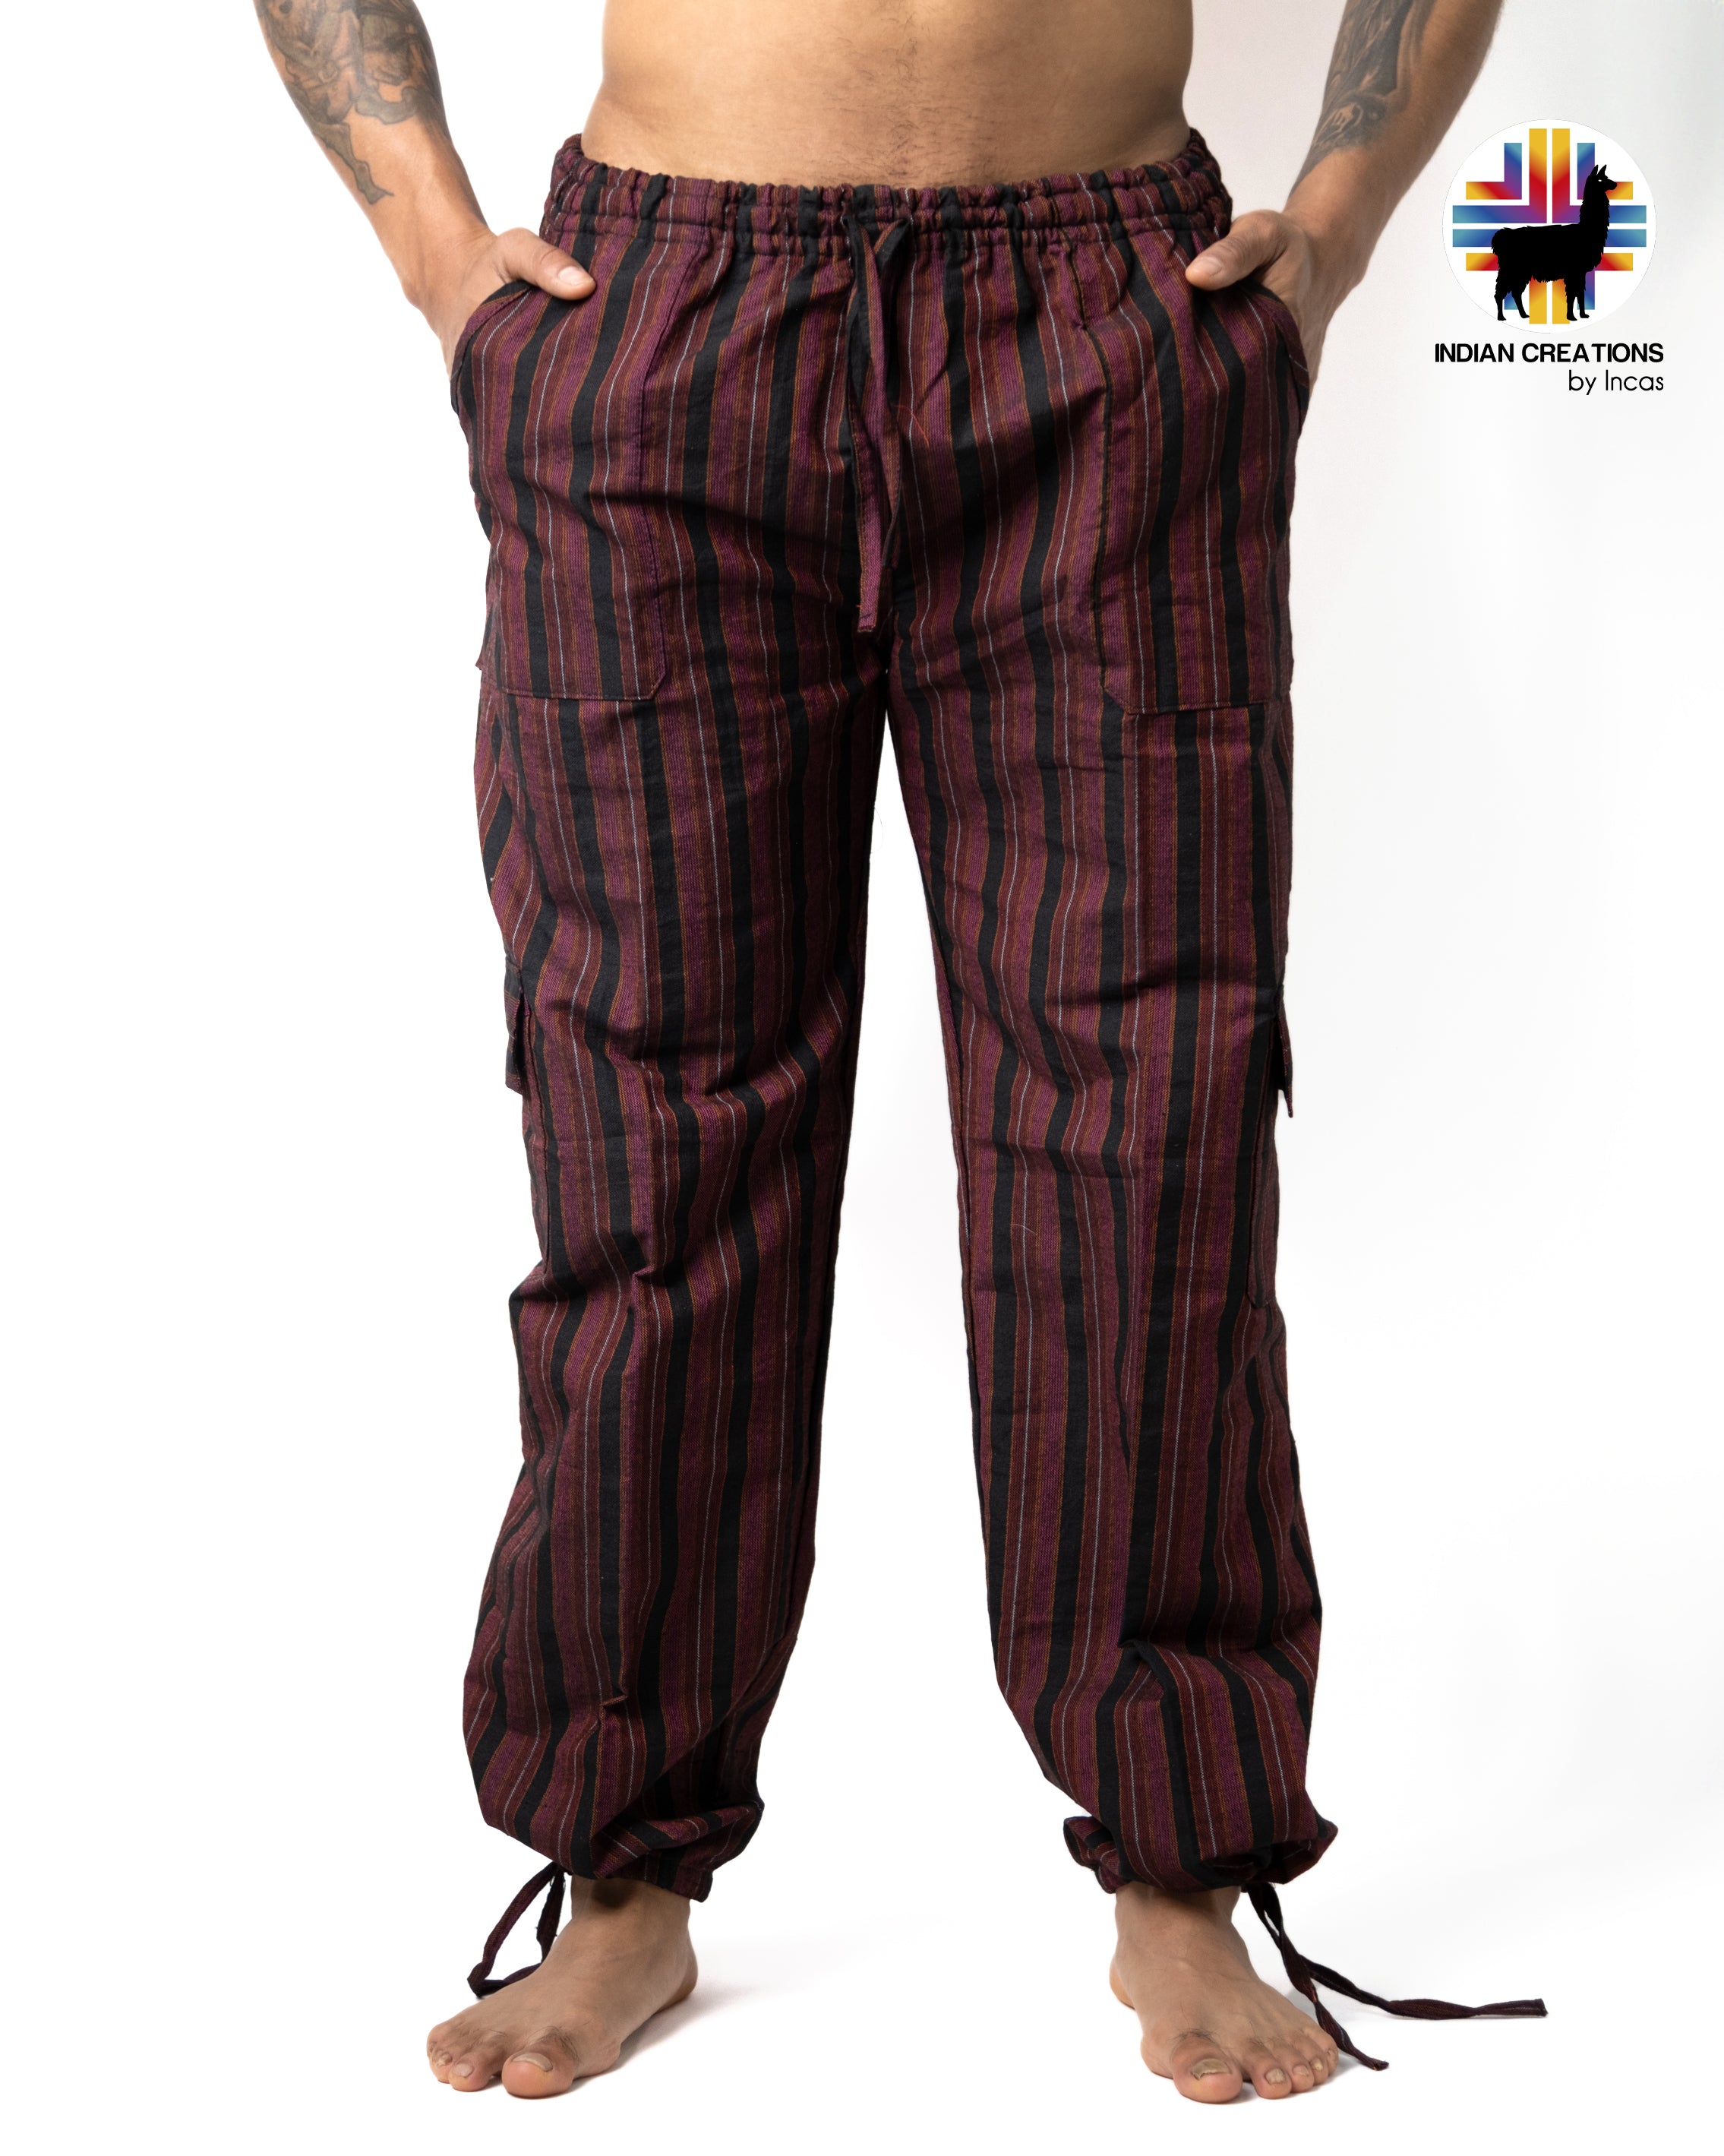 Boho Cotton Pants. Hippie Style Pants